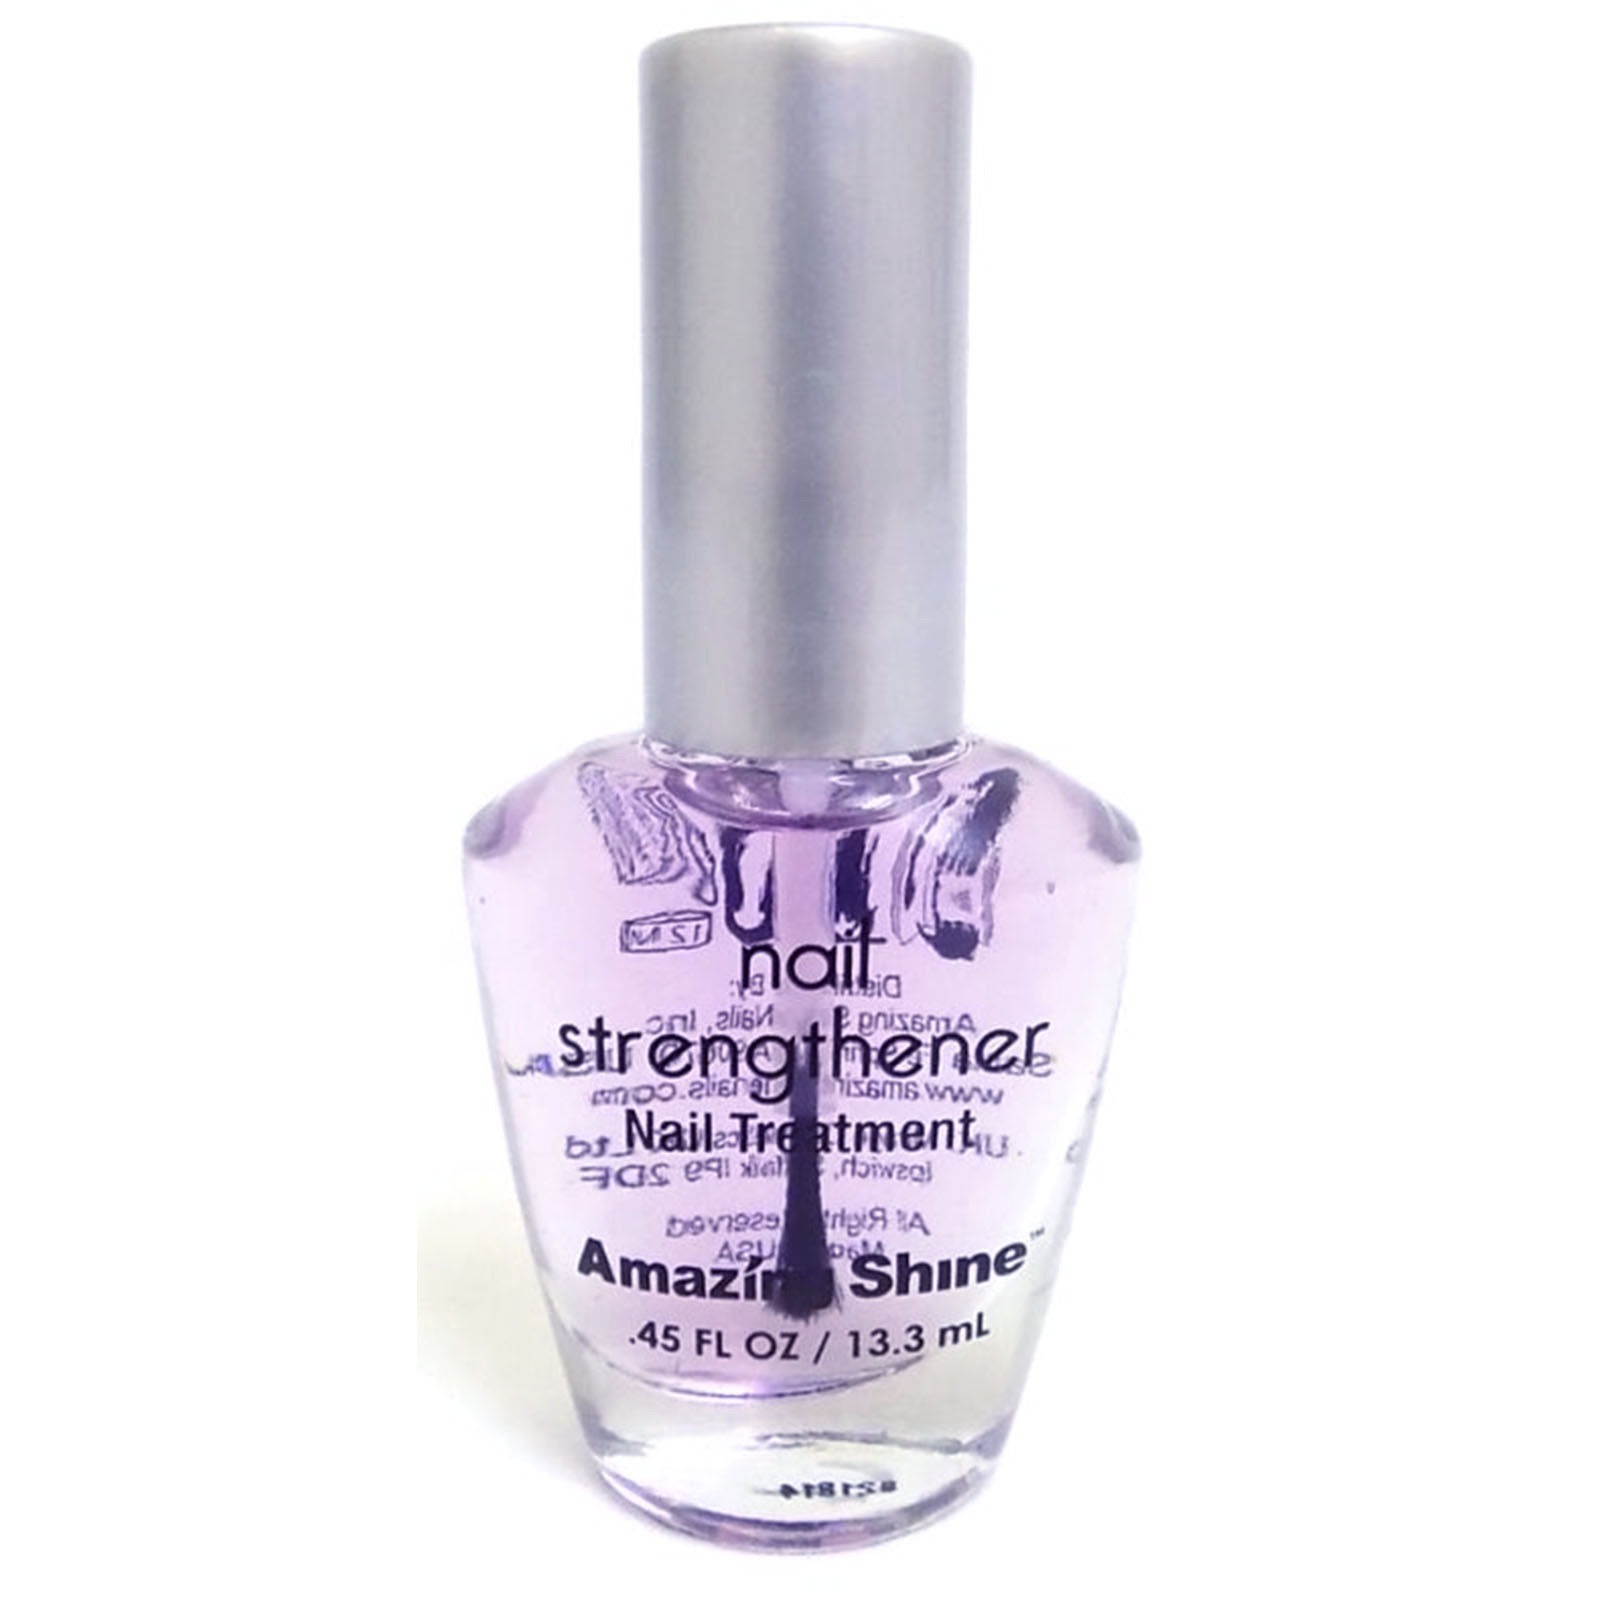 Amazing Shine Mineral Nail Treatment - Strengthener